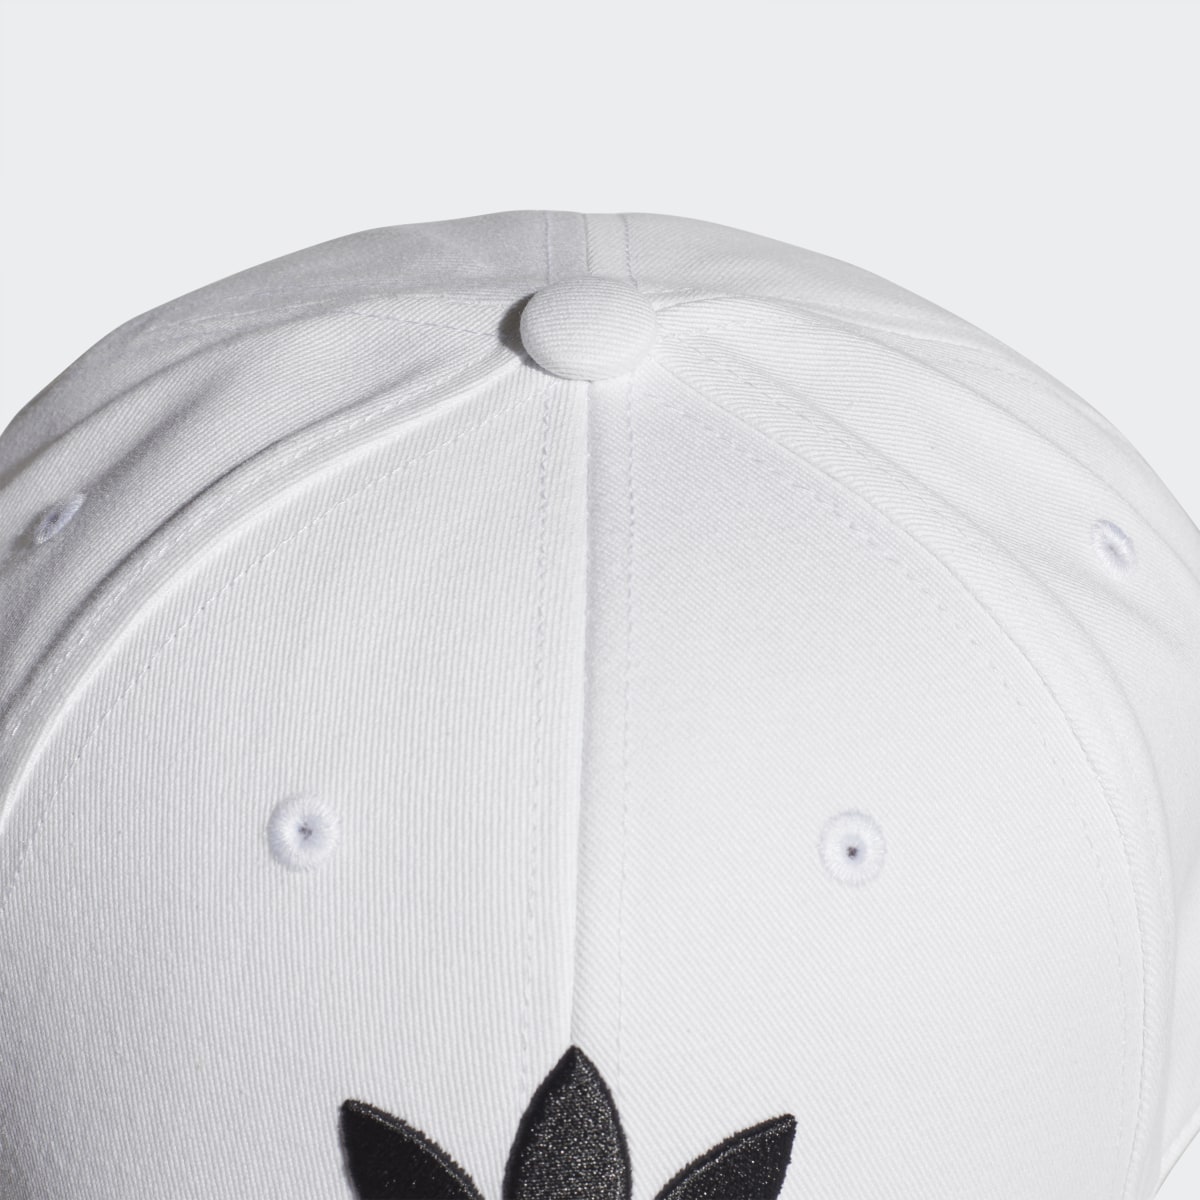 Adidas TREFOIL BASEBALL CAP. 7